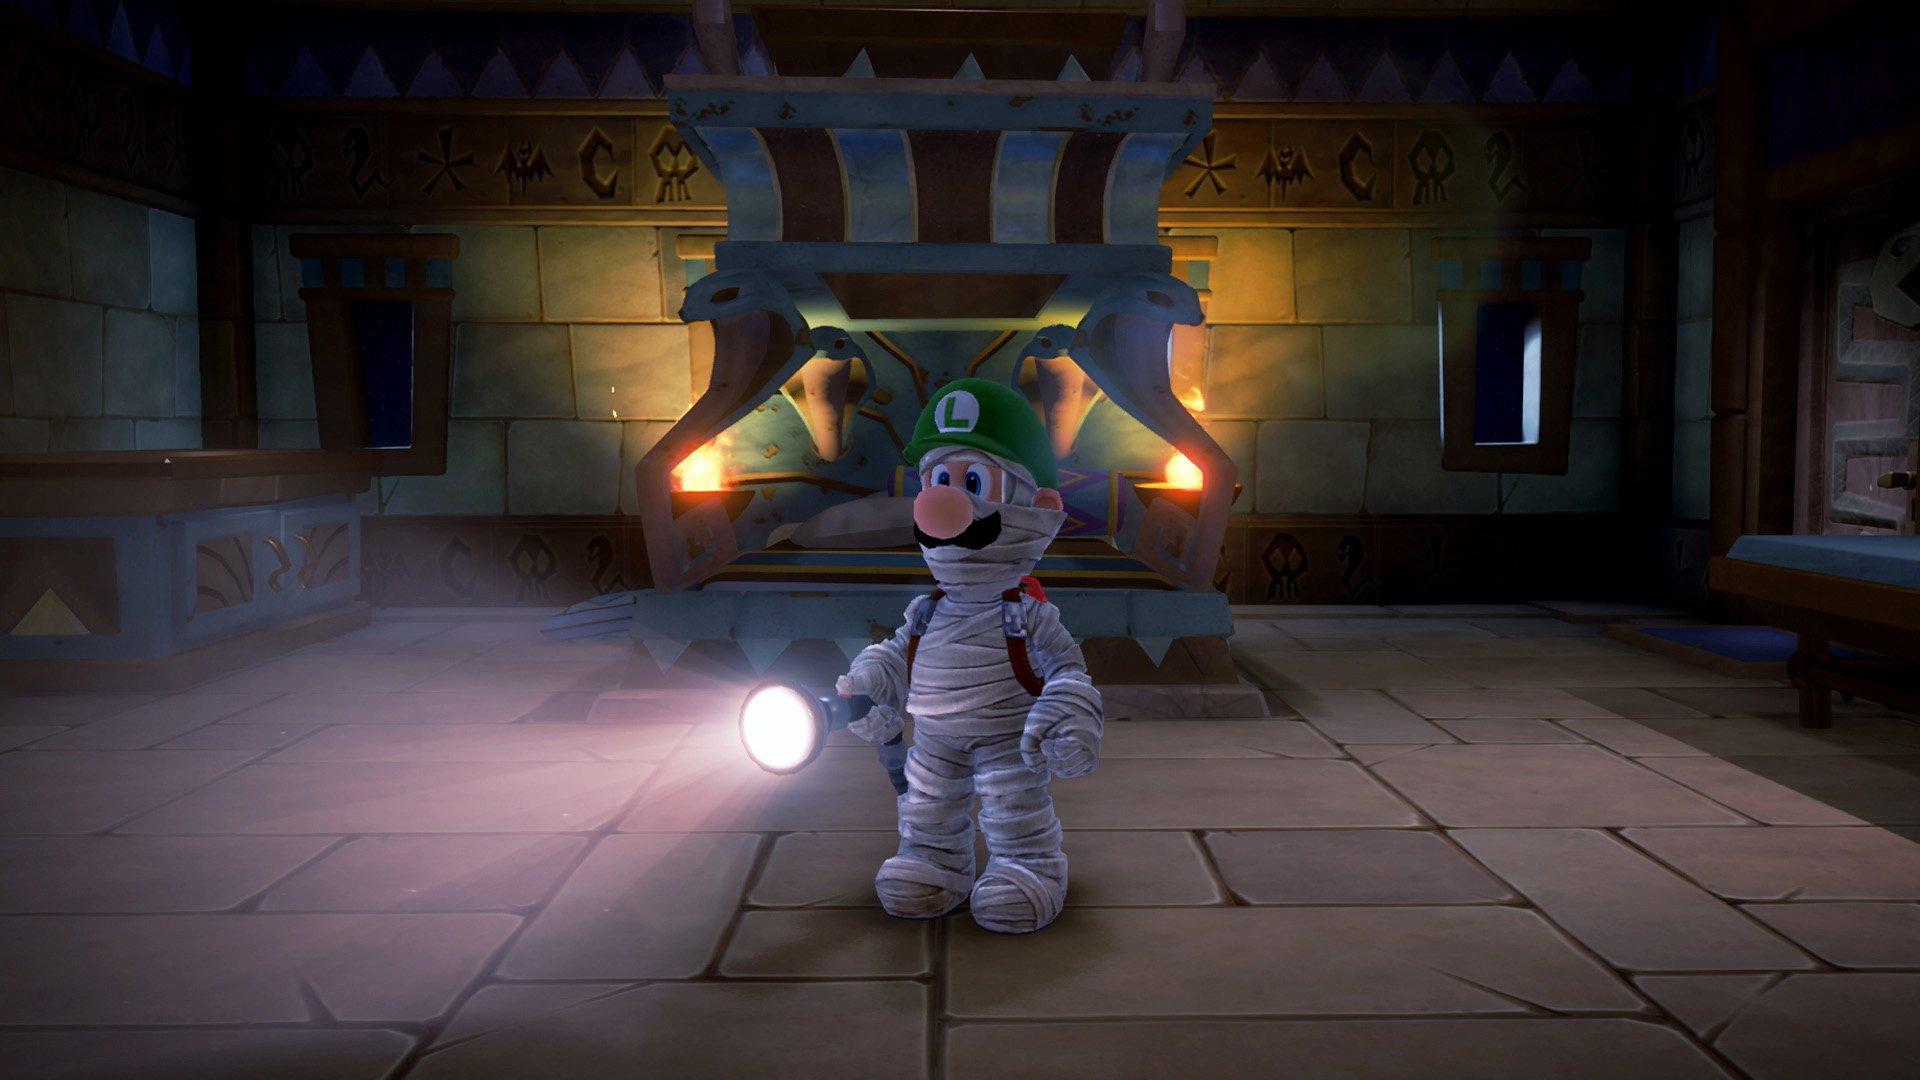 Luigi's Mansion™ 3 + Multiplayer Pack Set